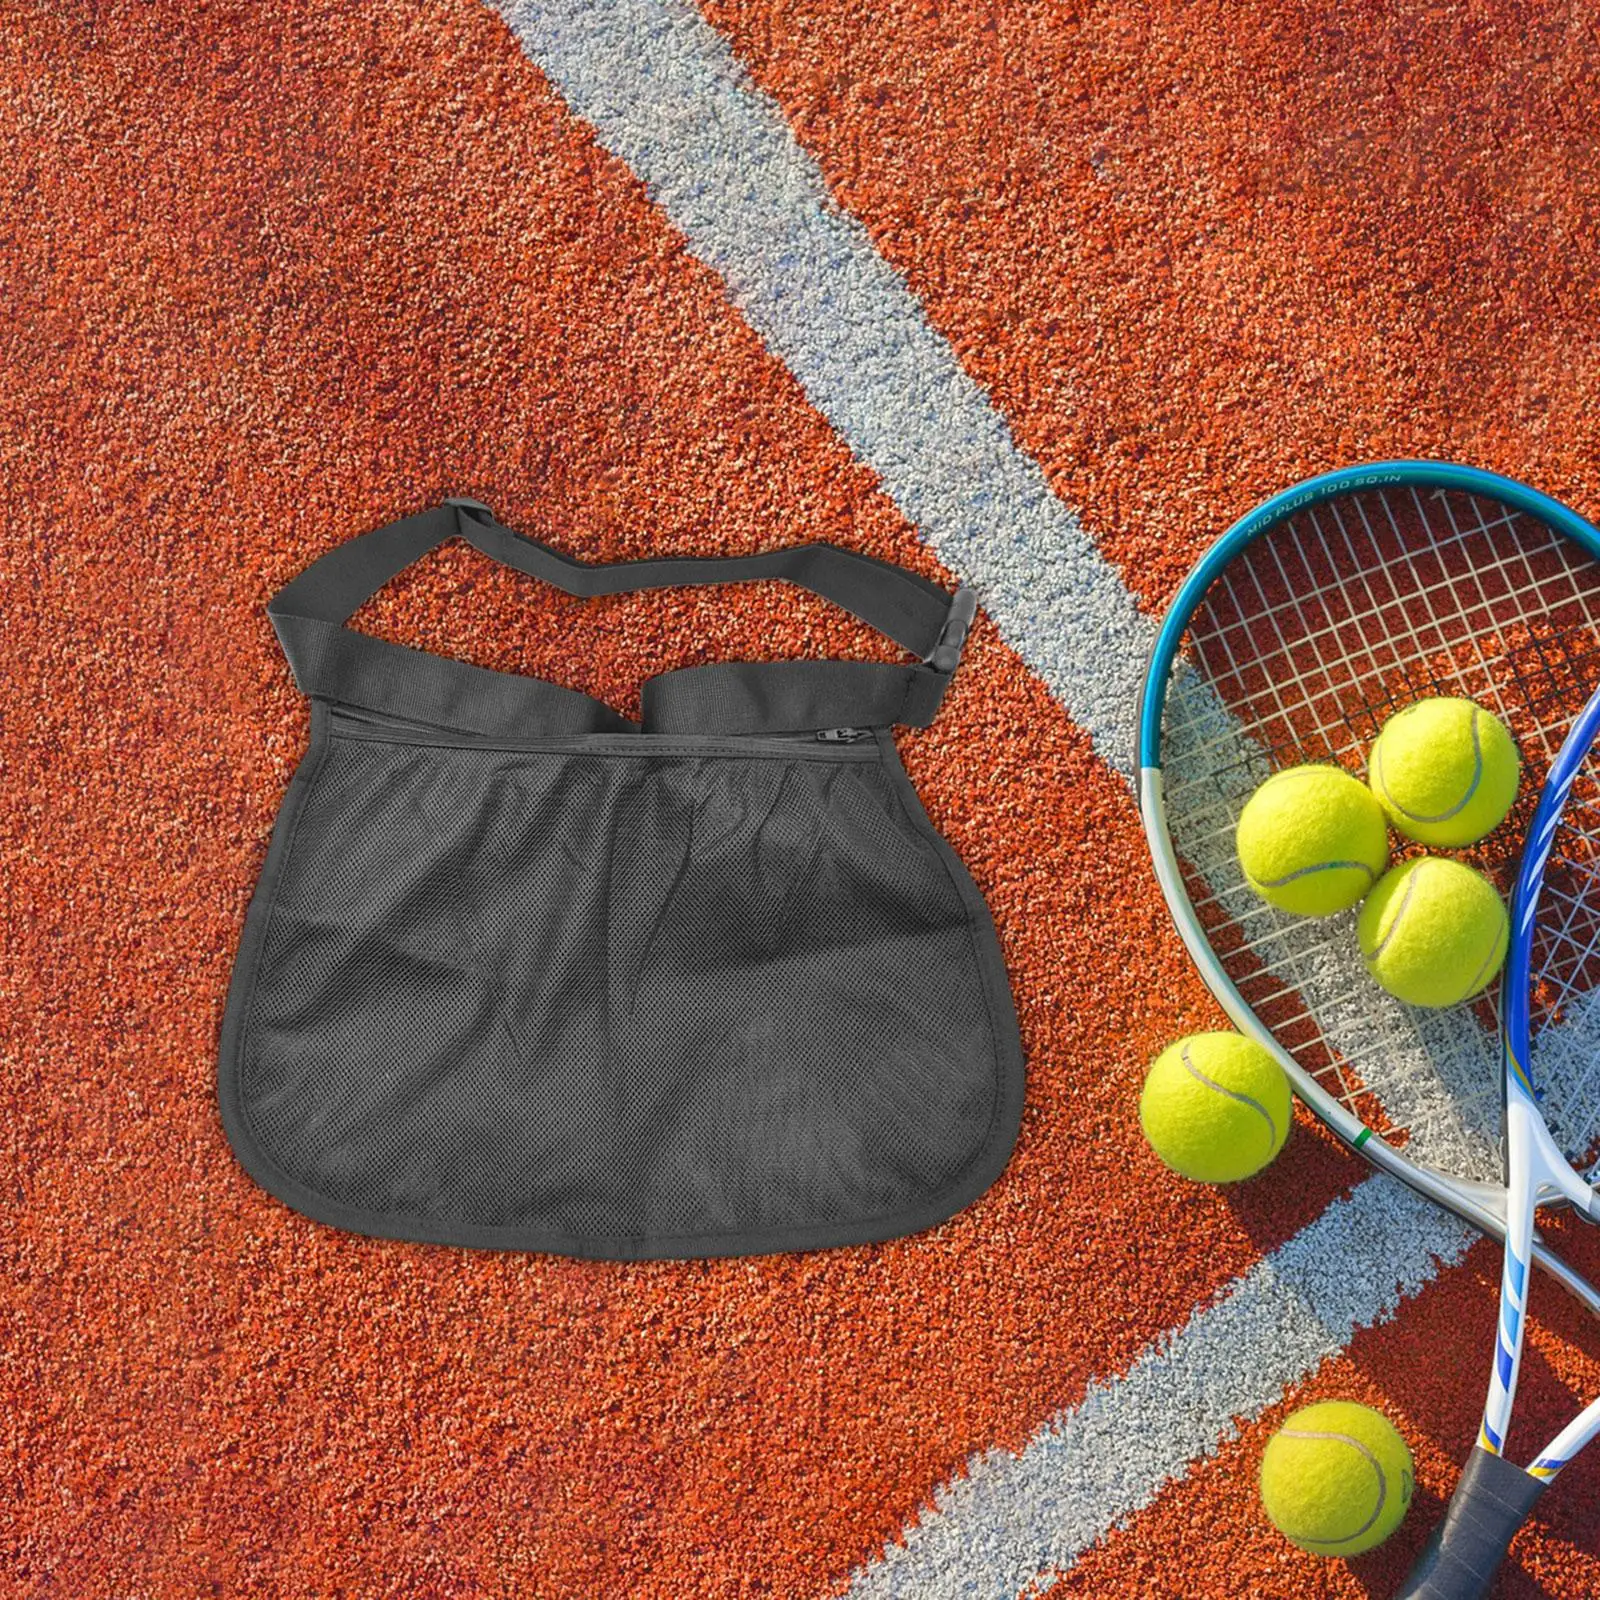 Tennis Ball Holder Table Tennis Ball Holder Bag Tennis Ball Storage Bag for Workout Storing Balls and Phones Women Men Exercise